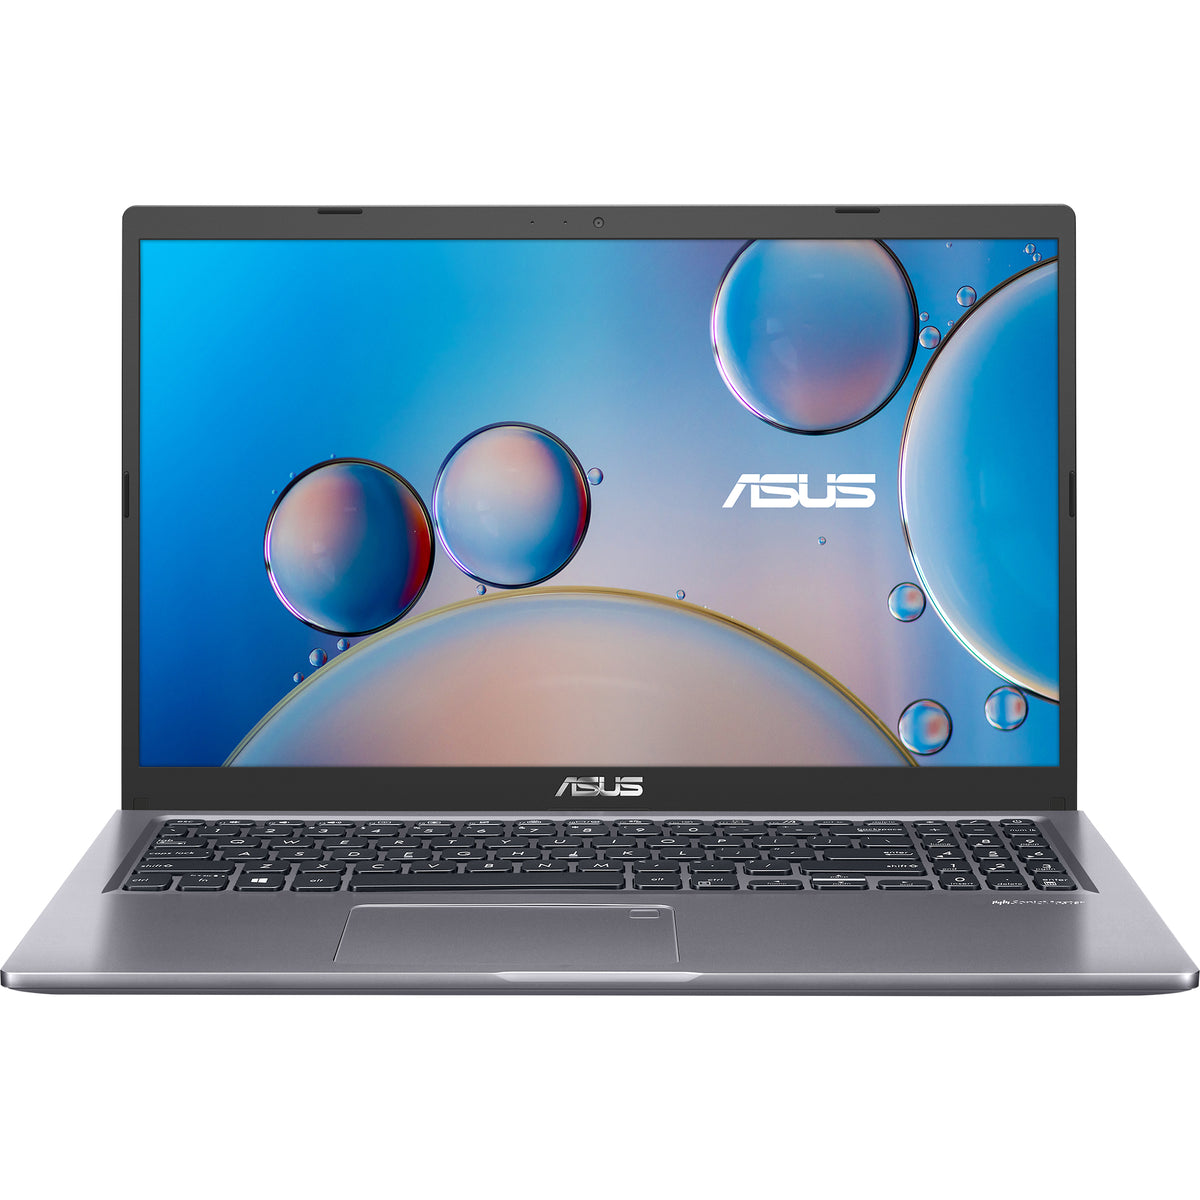 NB ASUS Laptop M515DA - R5 3500U 8GB 256GB SSD 15,6P FHD Radeon Vega 8 Graphics S/SO 3Yr - Silver